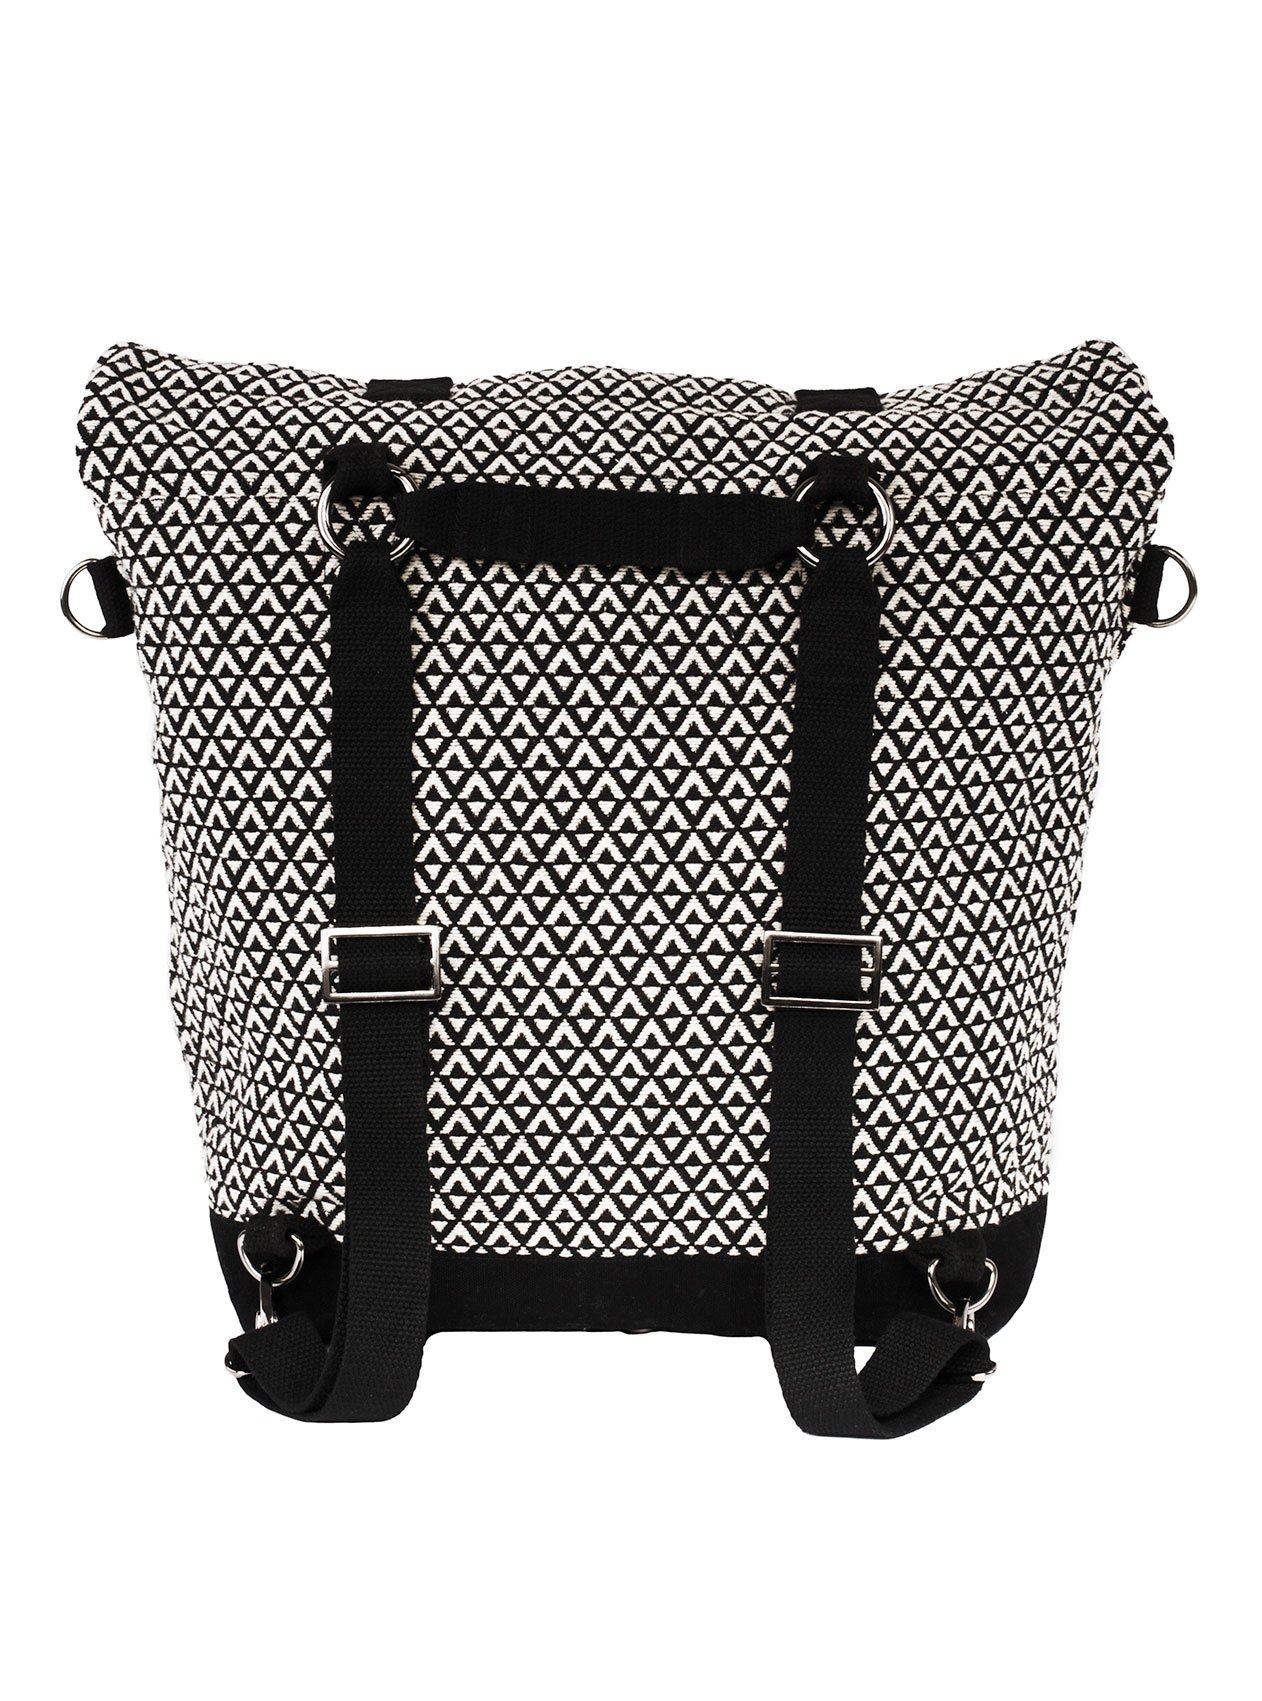 mara mea - diaper bag road trip - black/off white pattern 3